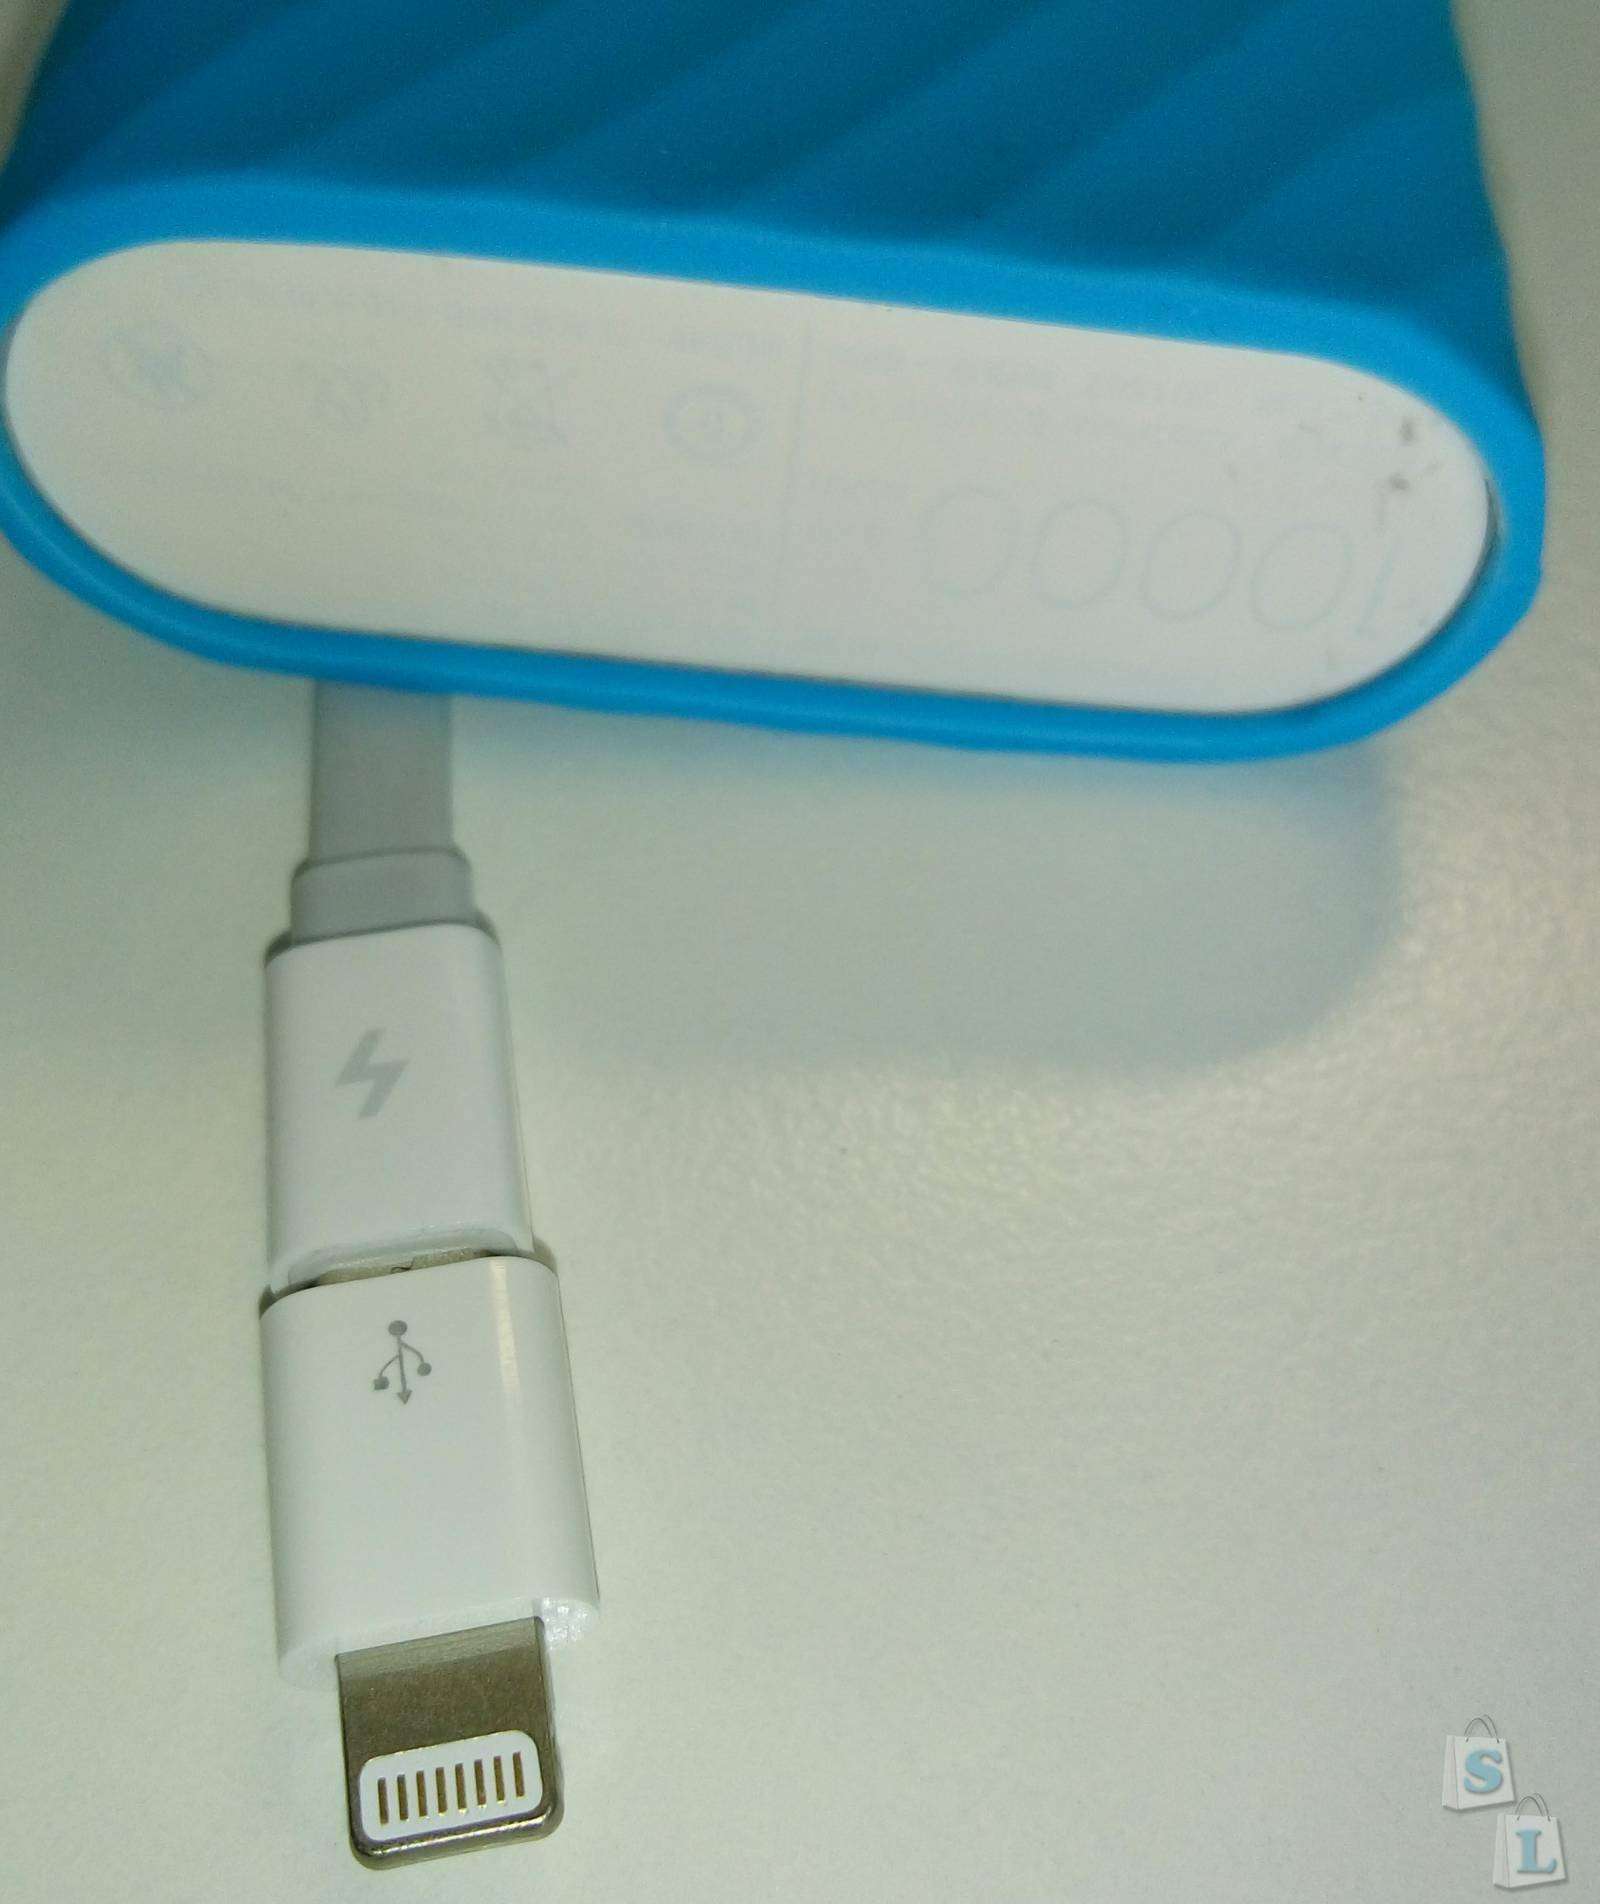 Aliexpress: micro USB to Lighting переходник для Iphone 5